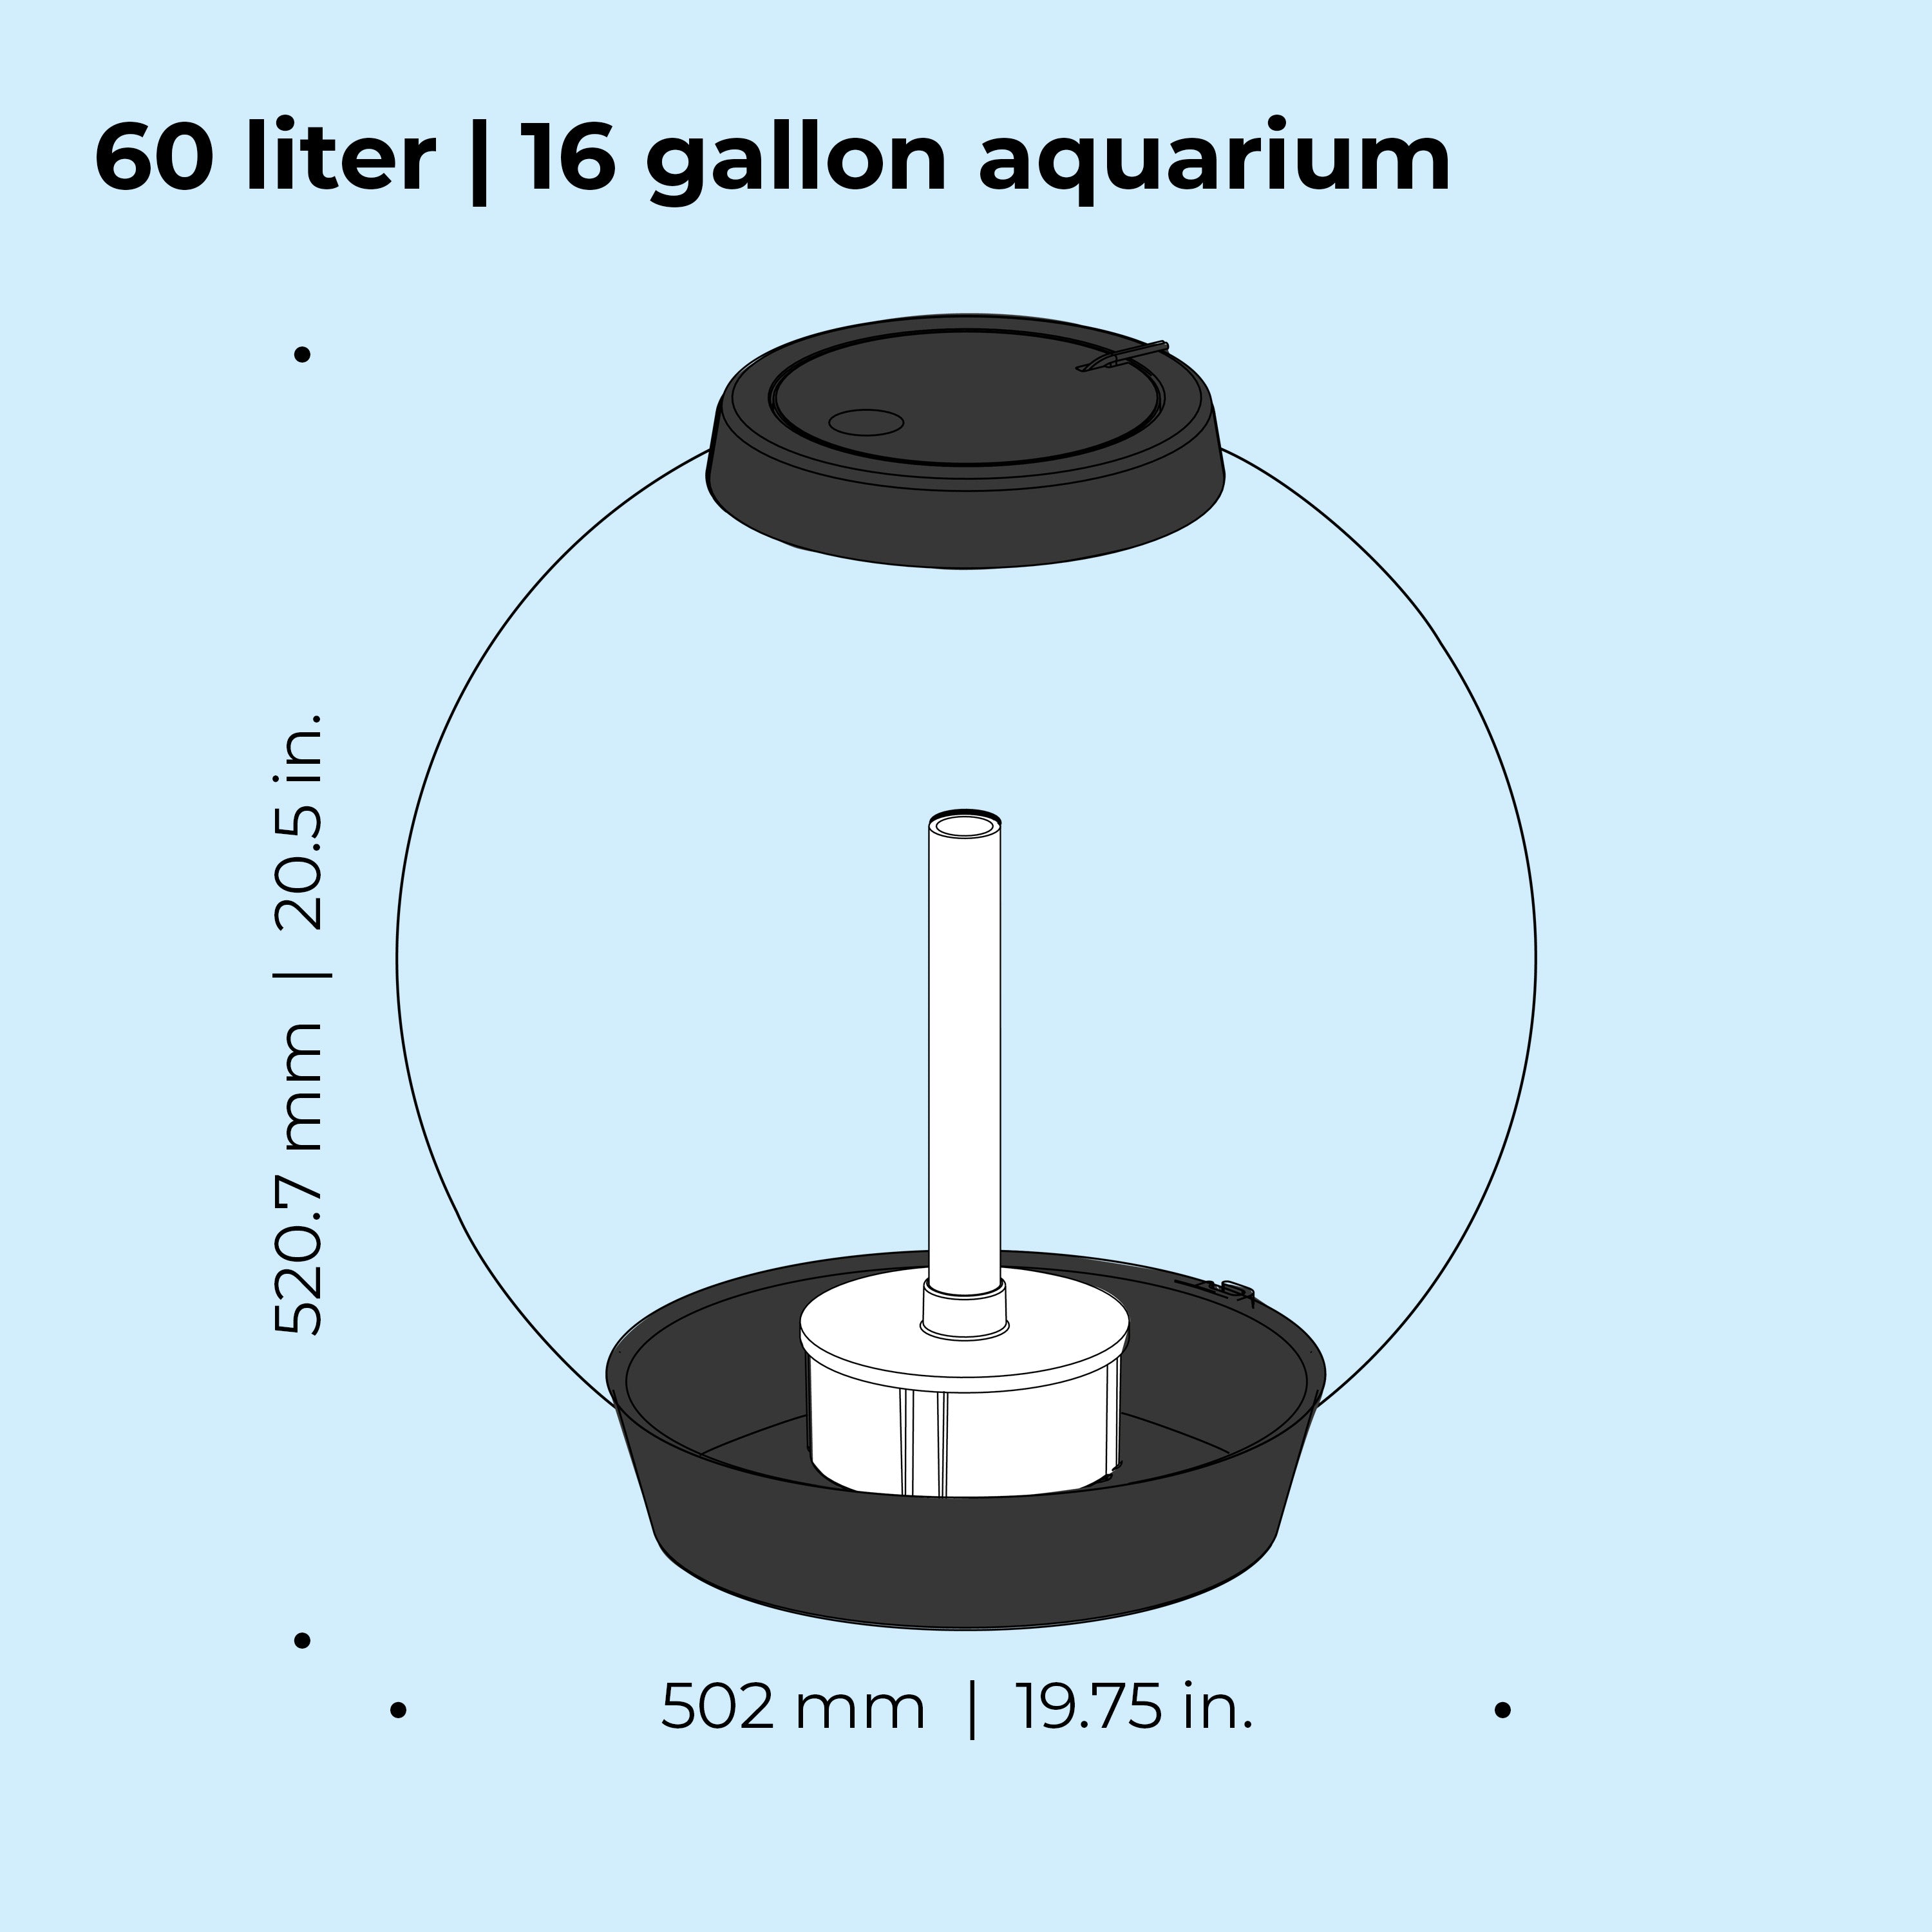 CLASSIC 60 Aquarium with MCR Light - 16 gallon, 60 liter dimension chart